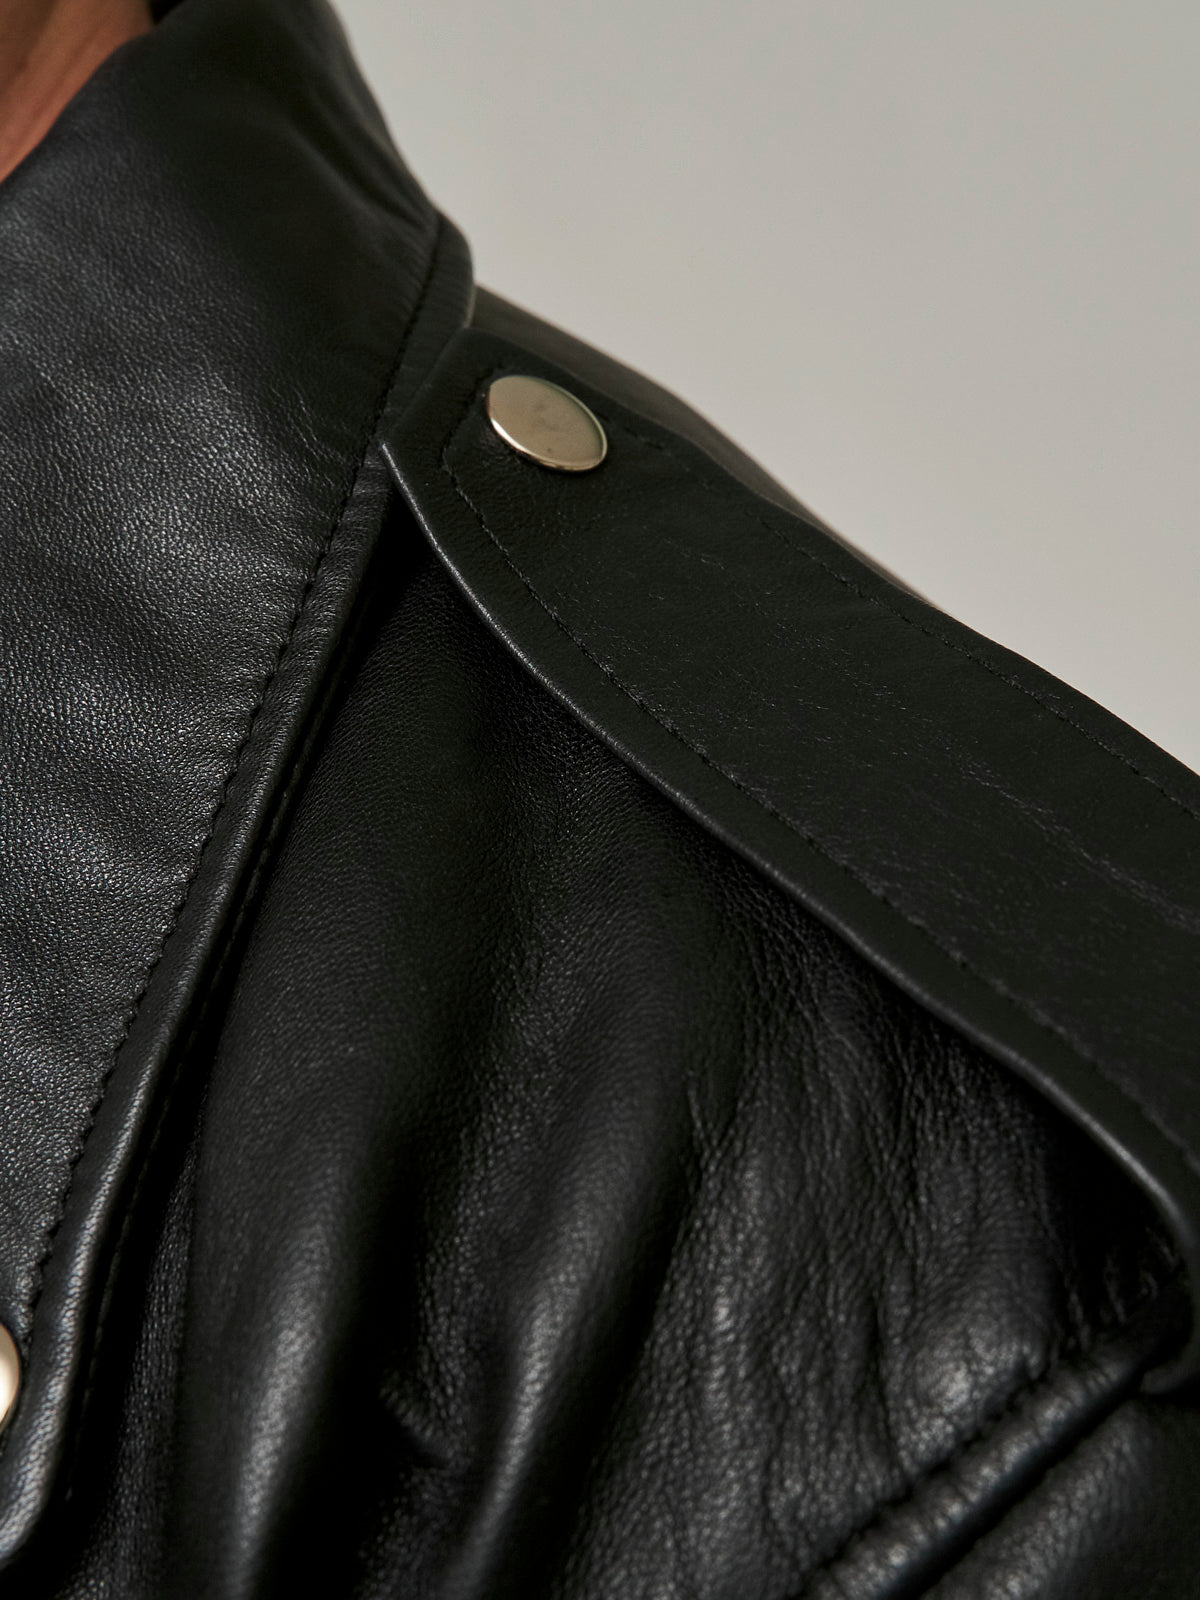 Carbon Matte Leather Jacket Men/ LMTD Edition